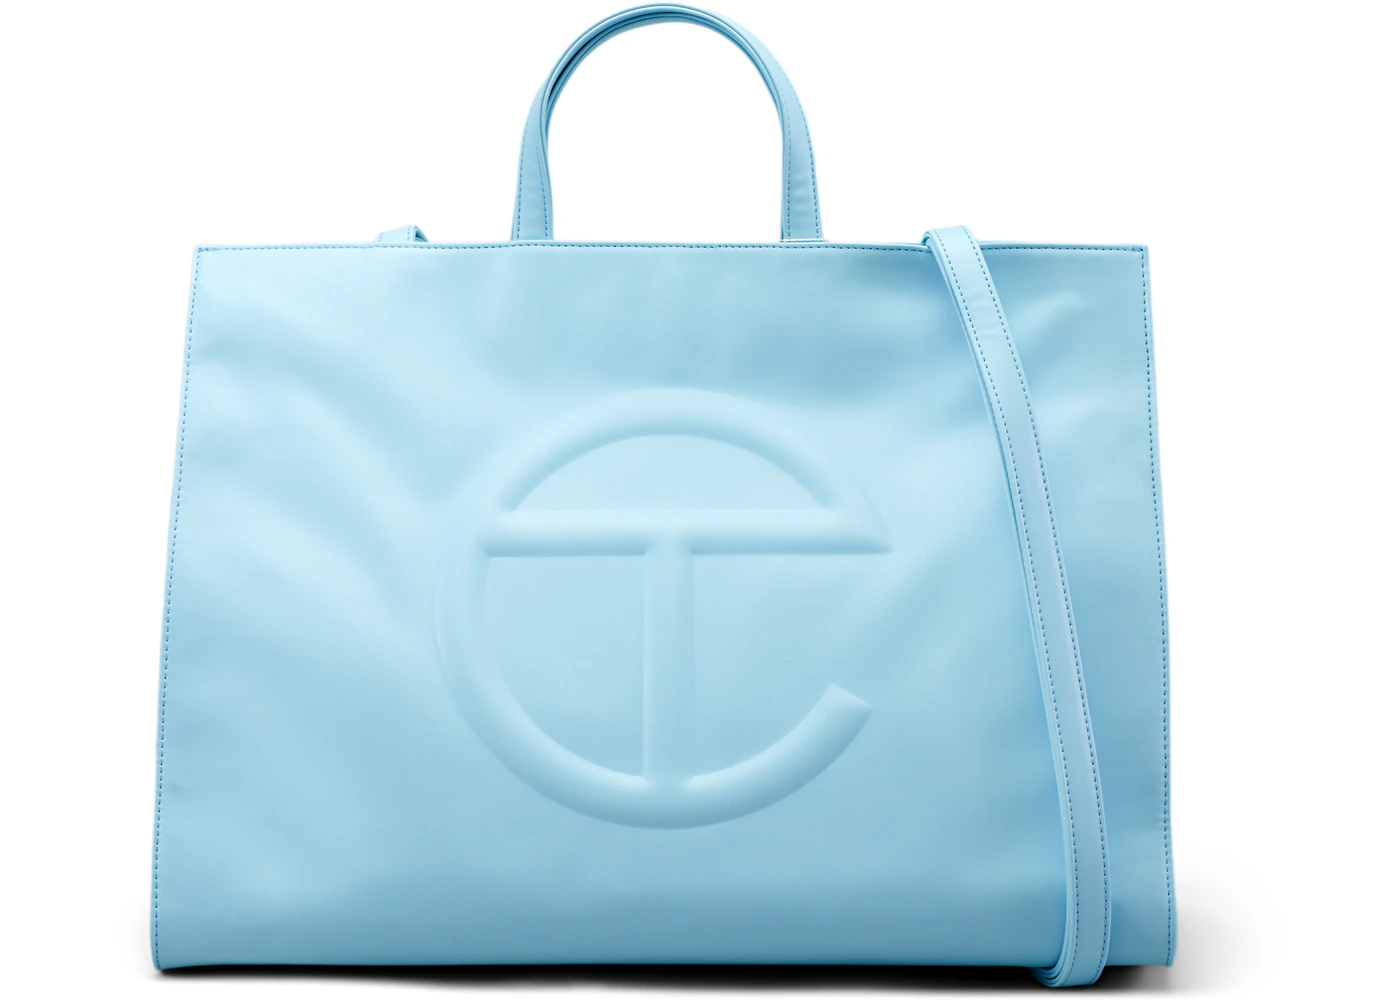 Telfar Shopping Bag Large Pool Blue